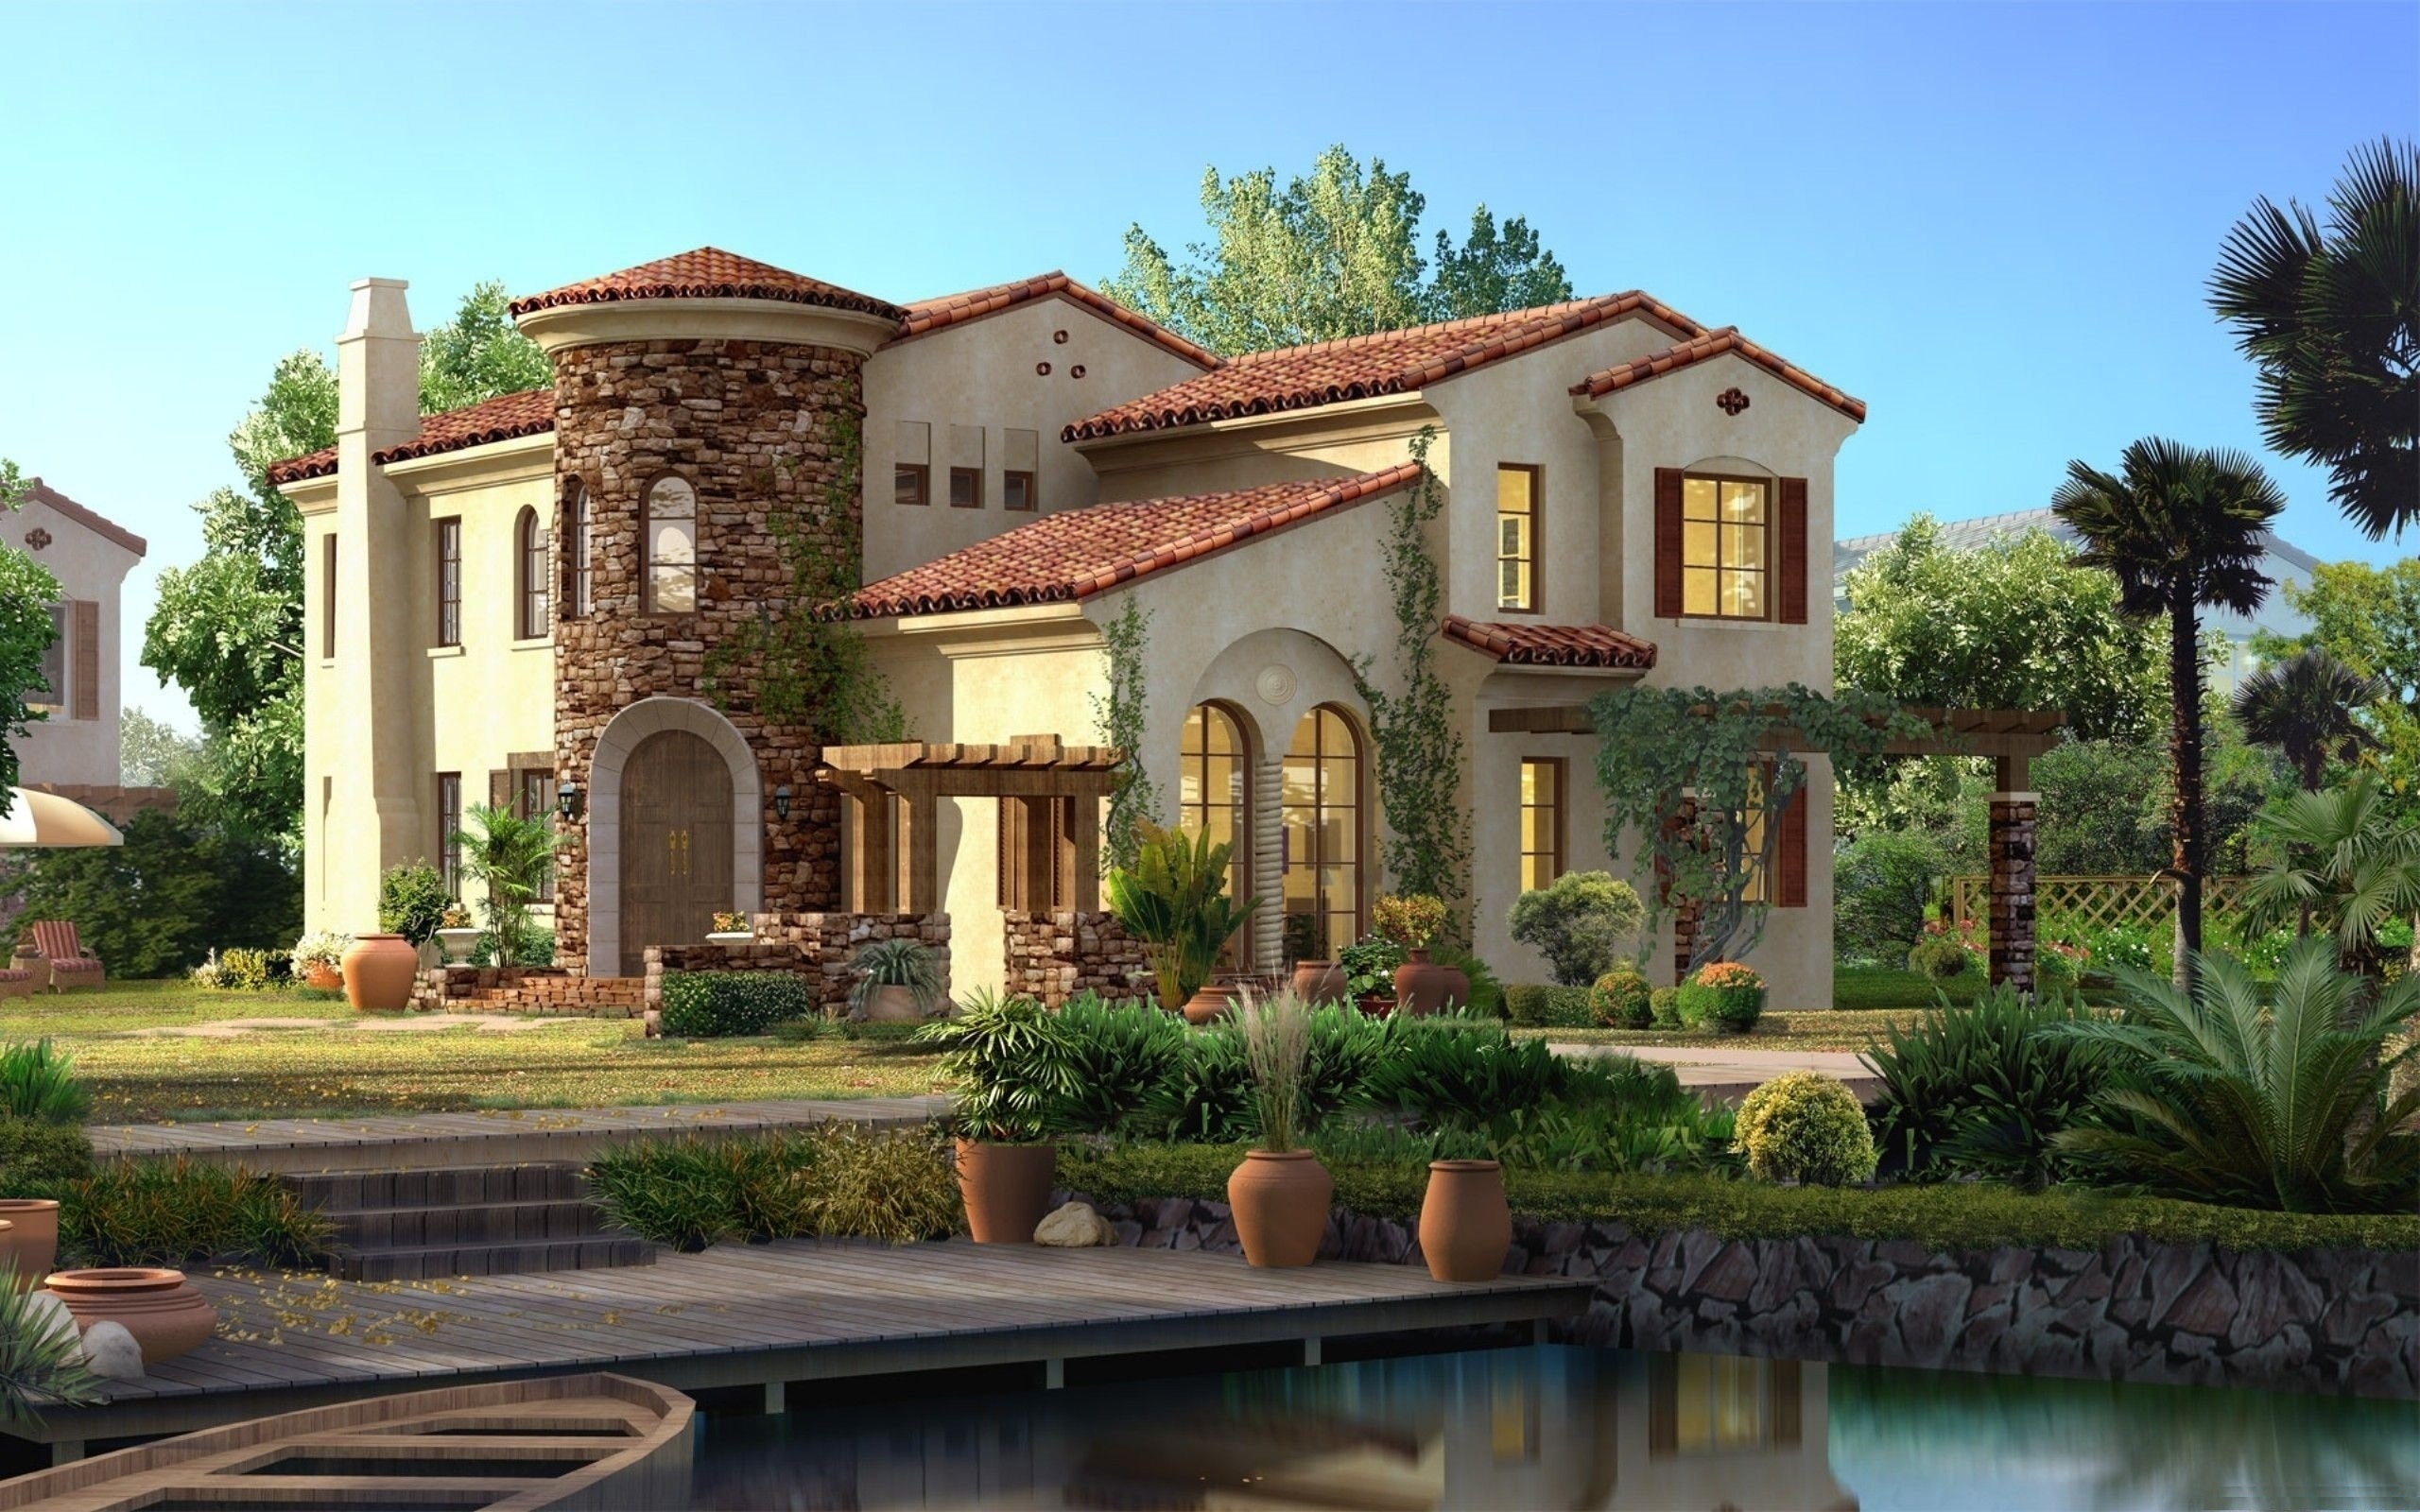 House Backyard Plants Swimming Pool Architecture 3D 2560x1600